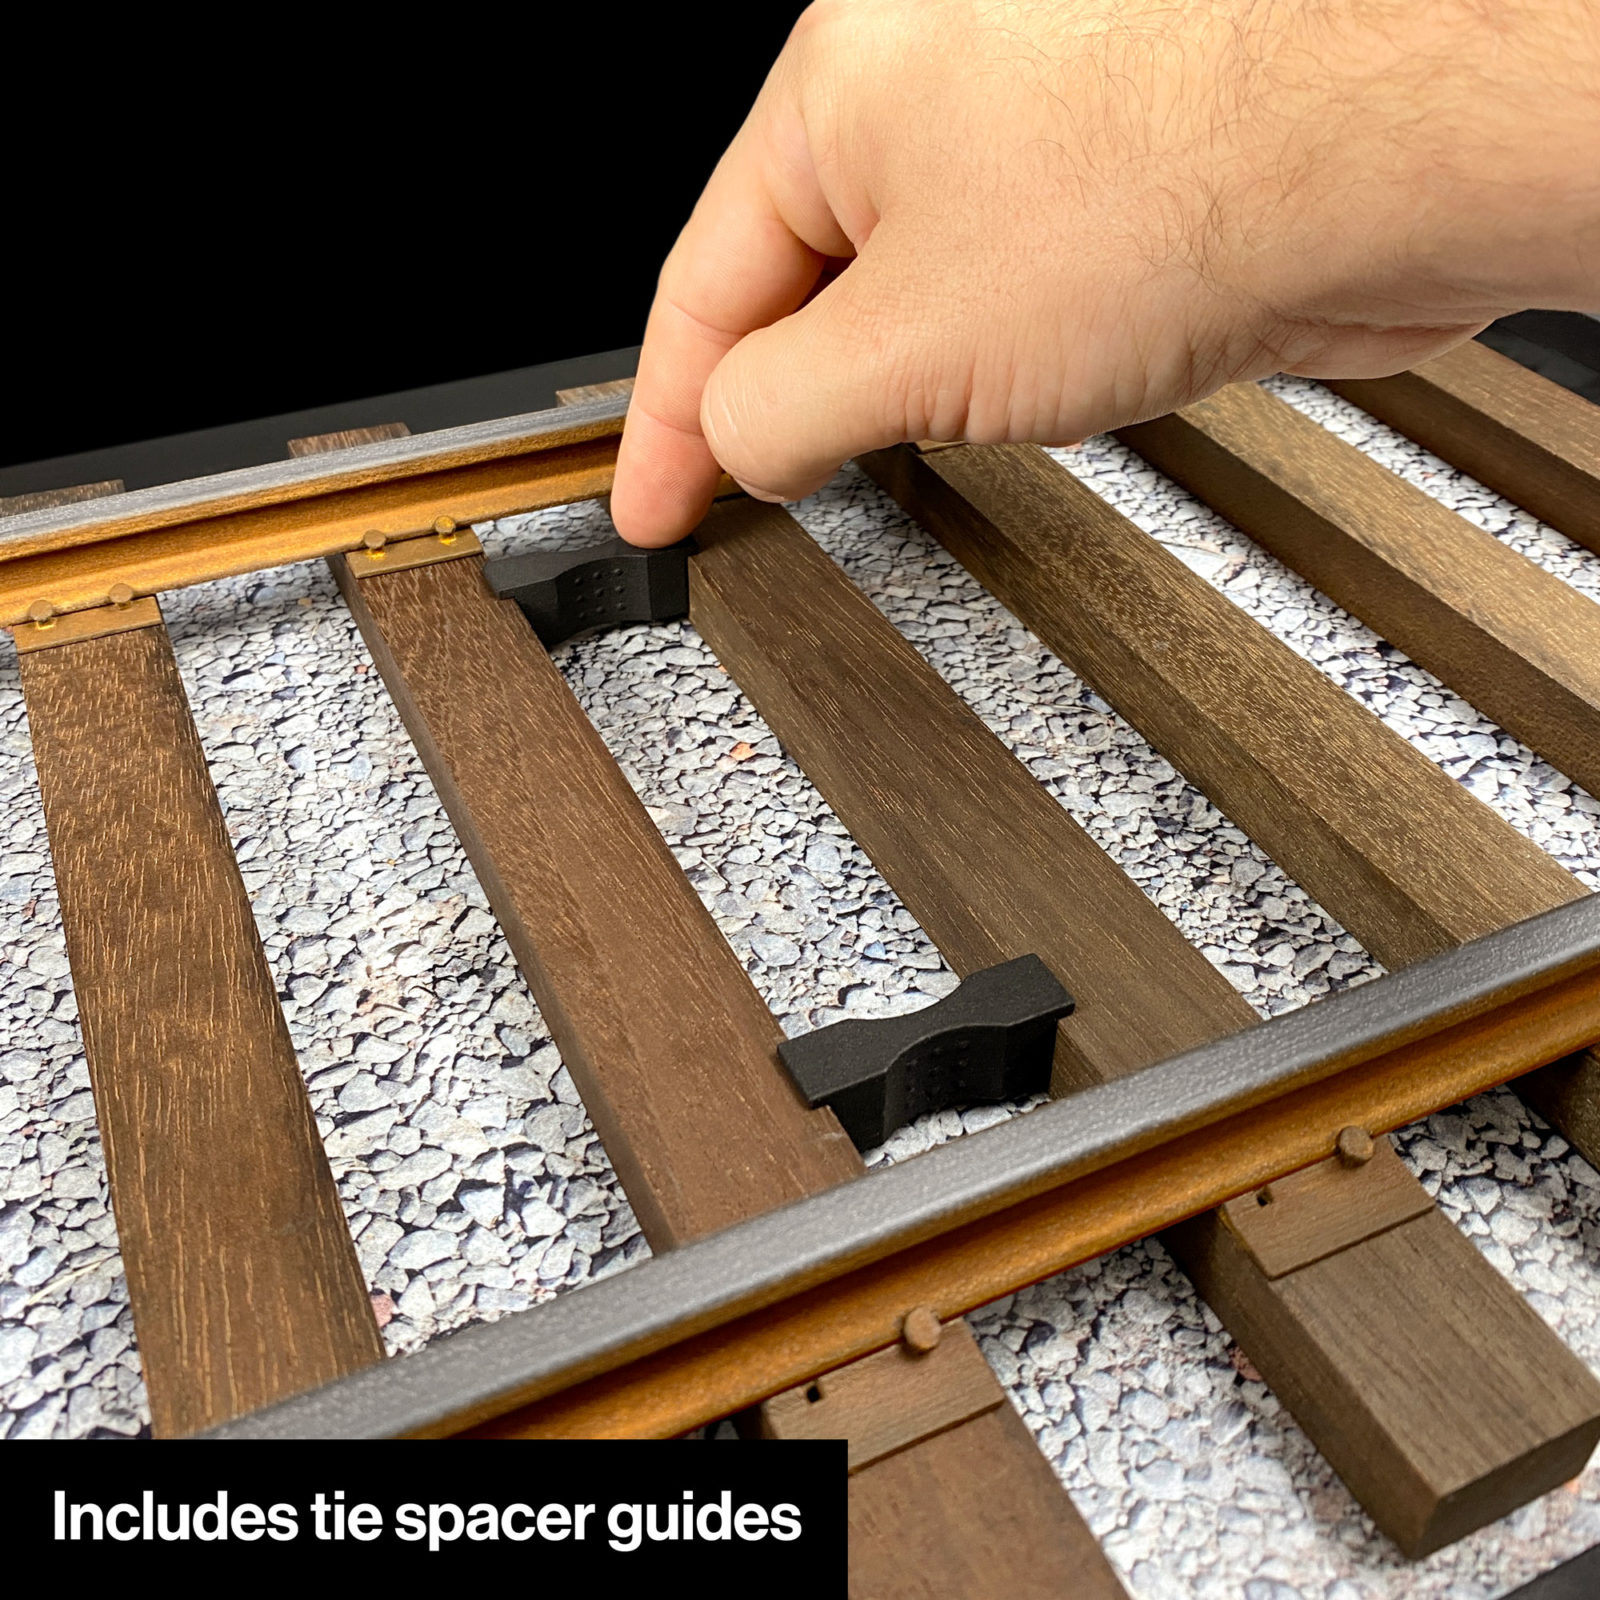 Using tie spacer guides for DeLorean Railroad mod